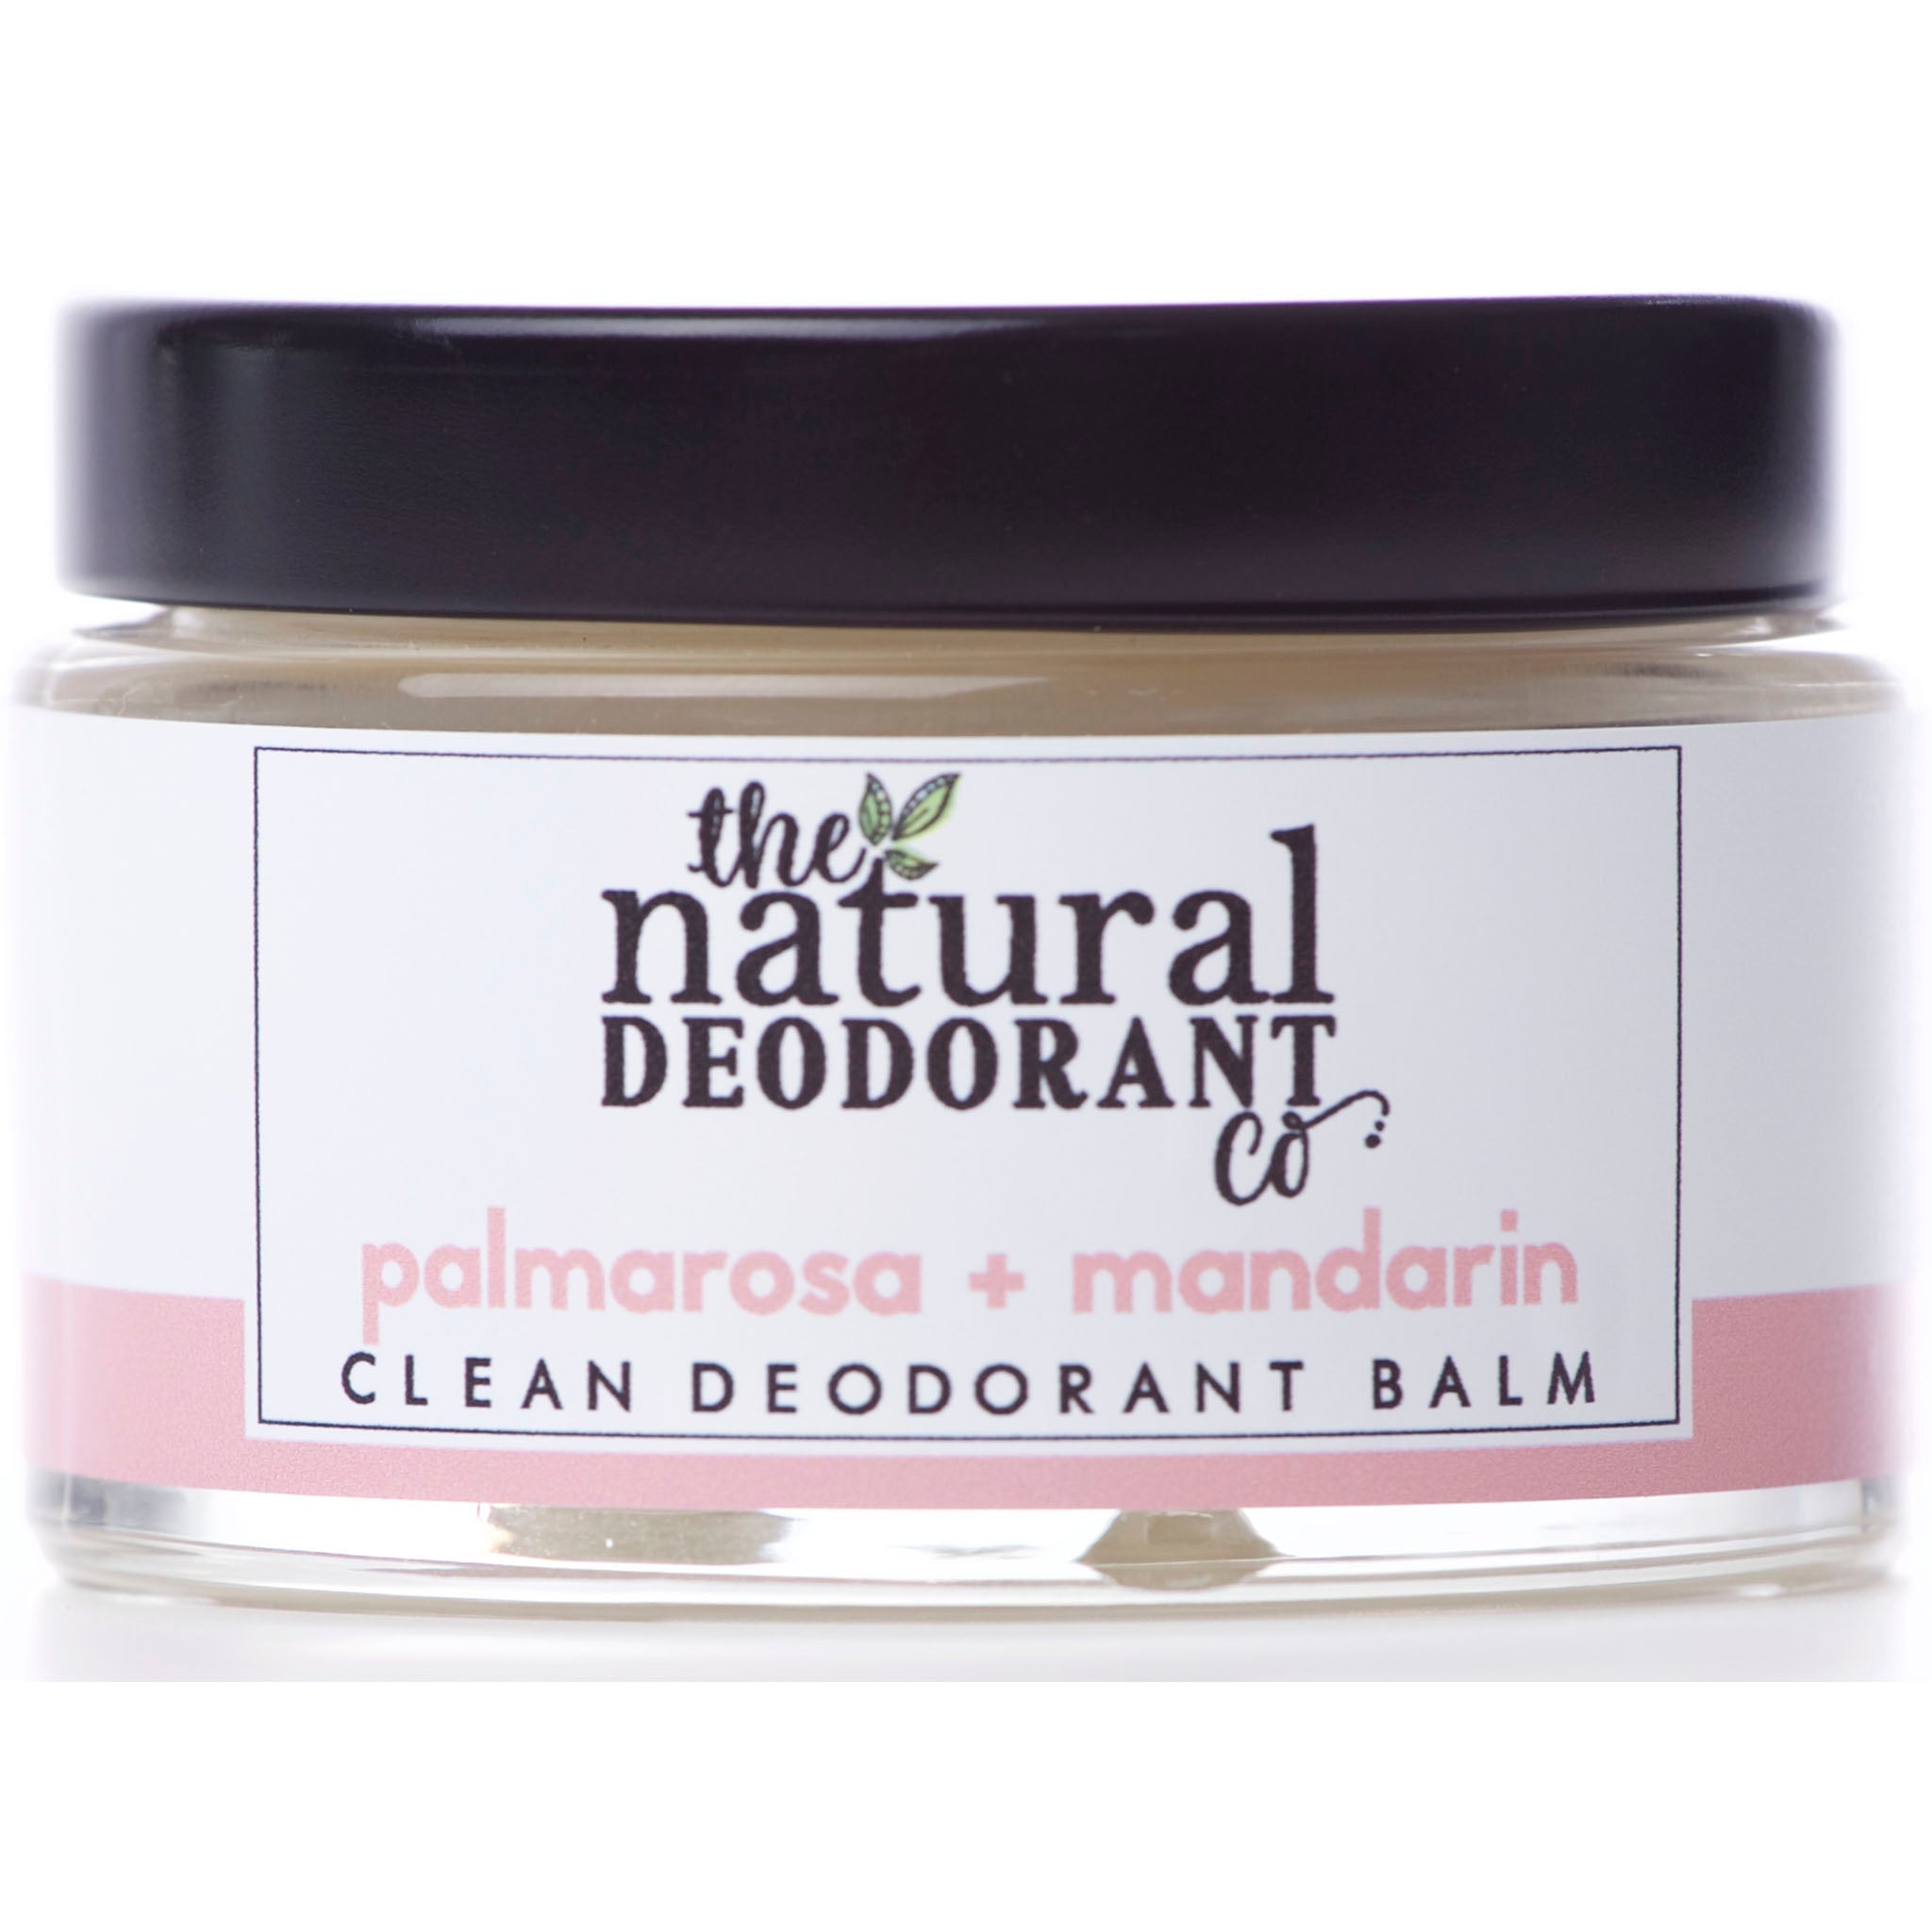 Clean Deodorant Balm | Palmarosa + Mandarin